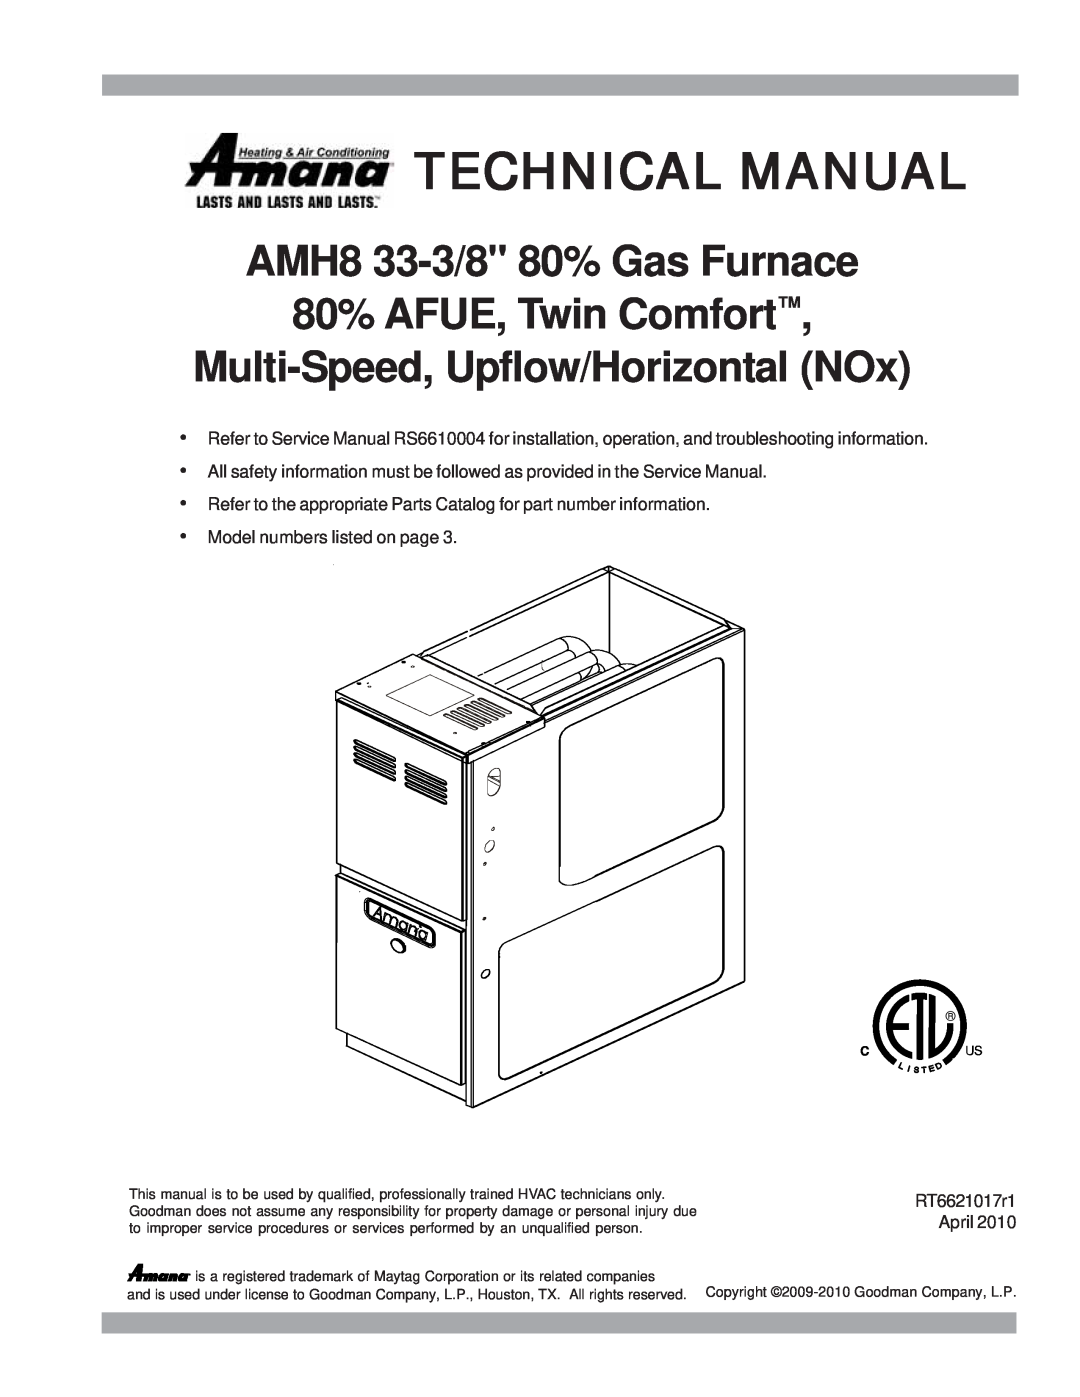 Amana AMH* service manual Technical Manual, AMH8 33-3/880% Gas Furnace 80% AFUE, Twin Comfort 